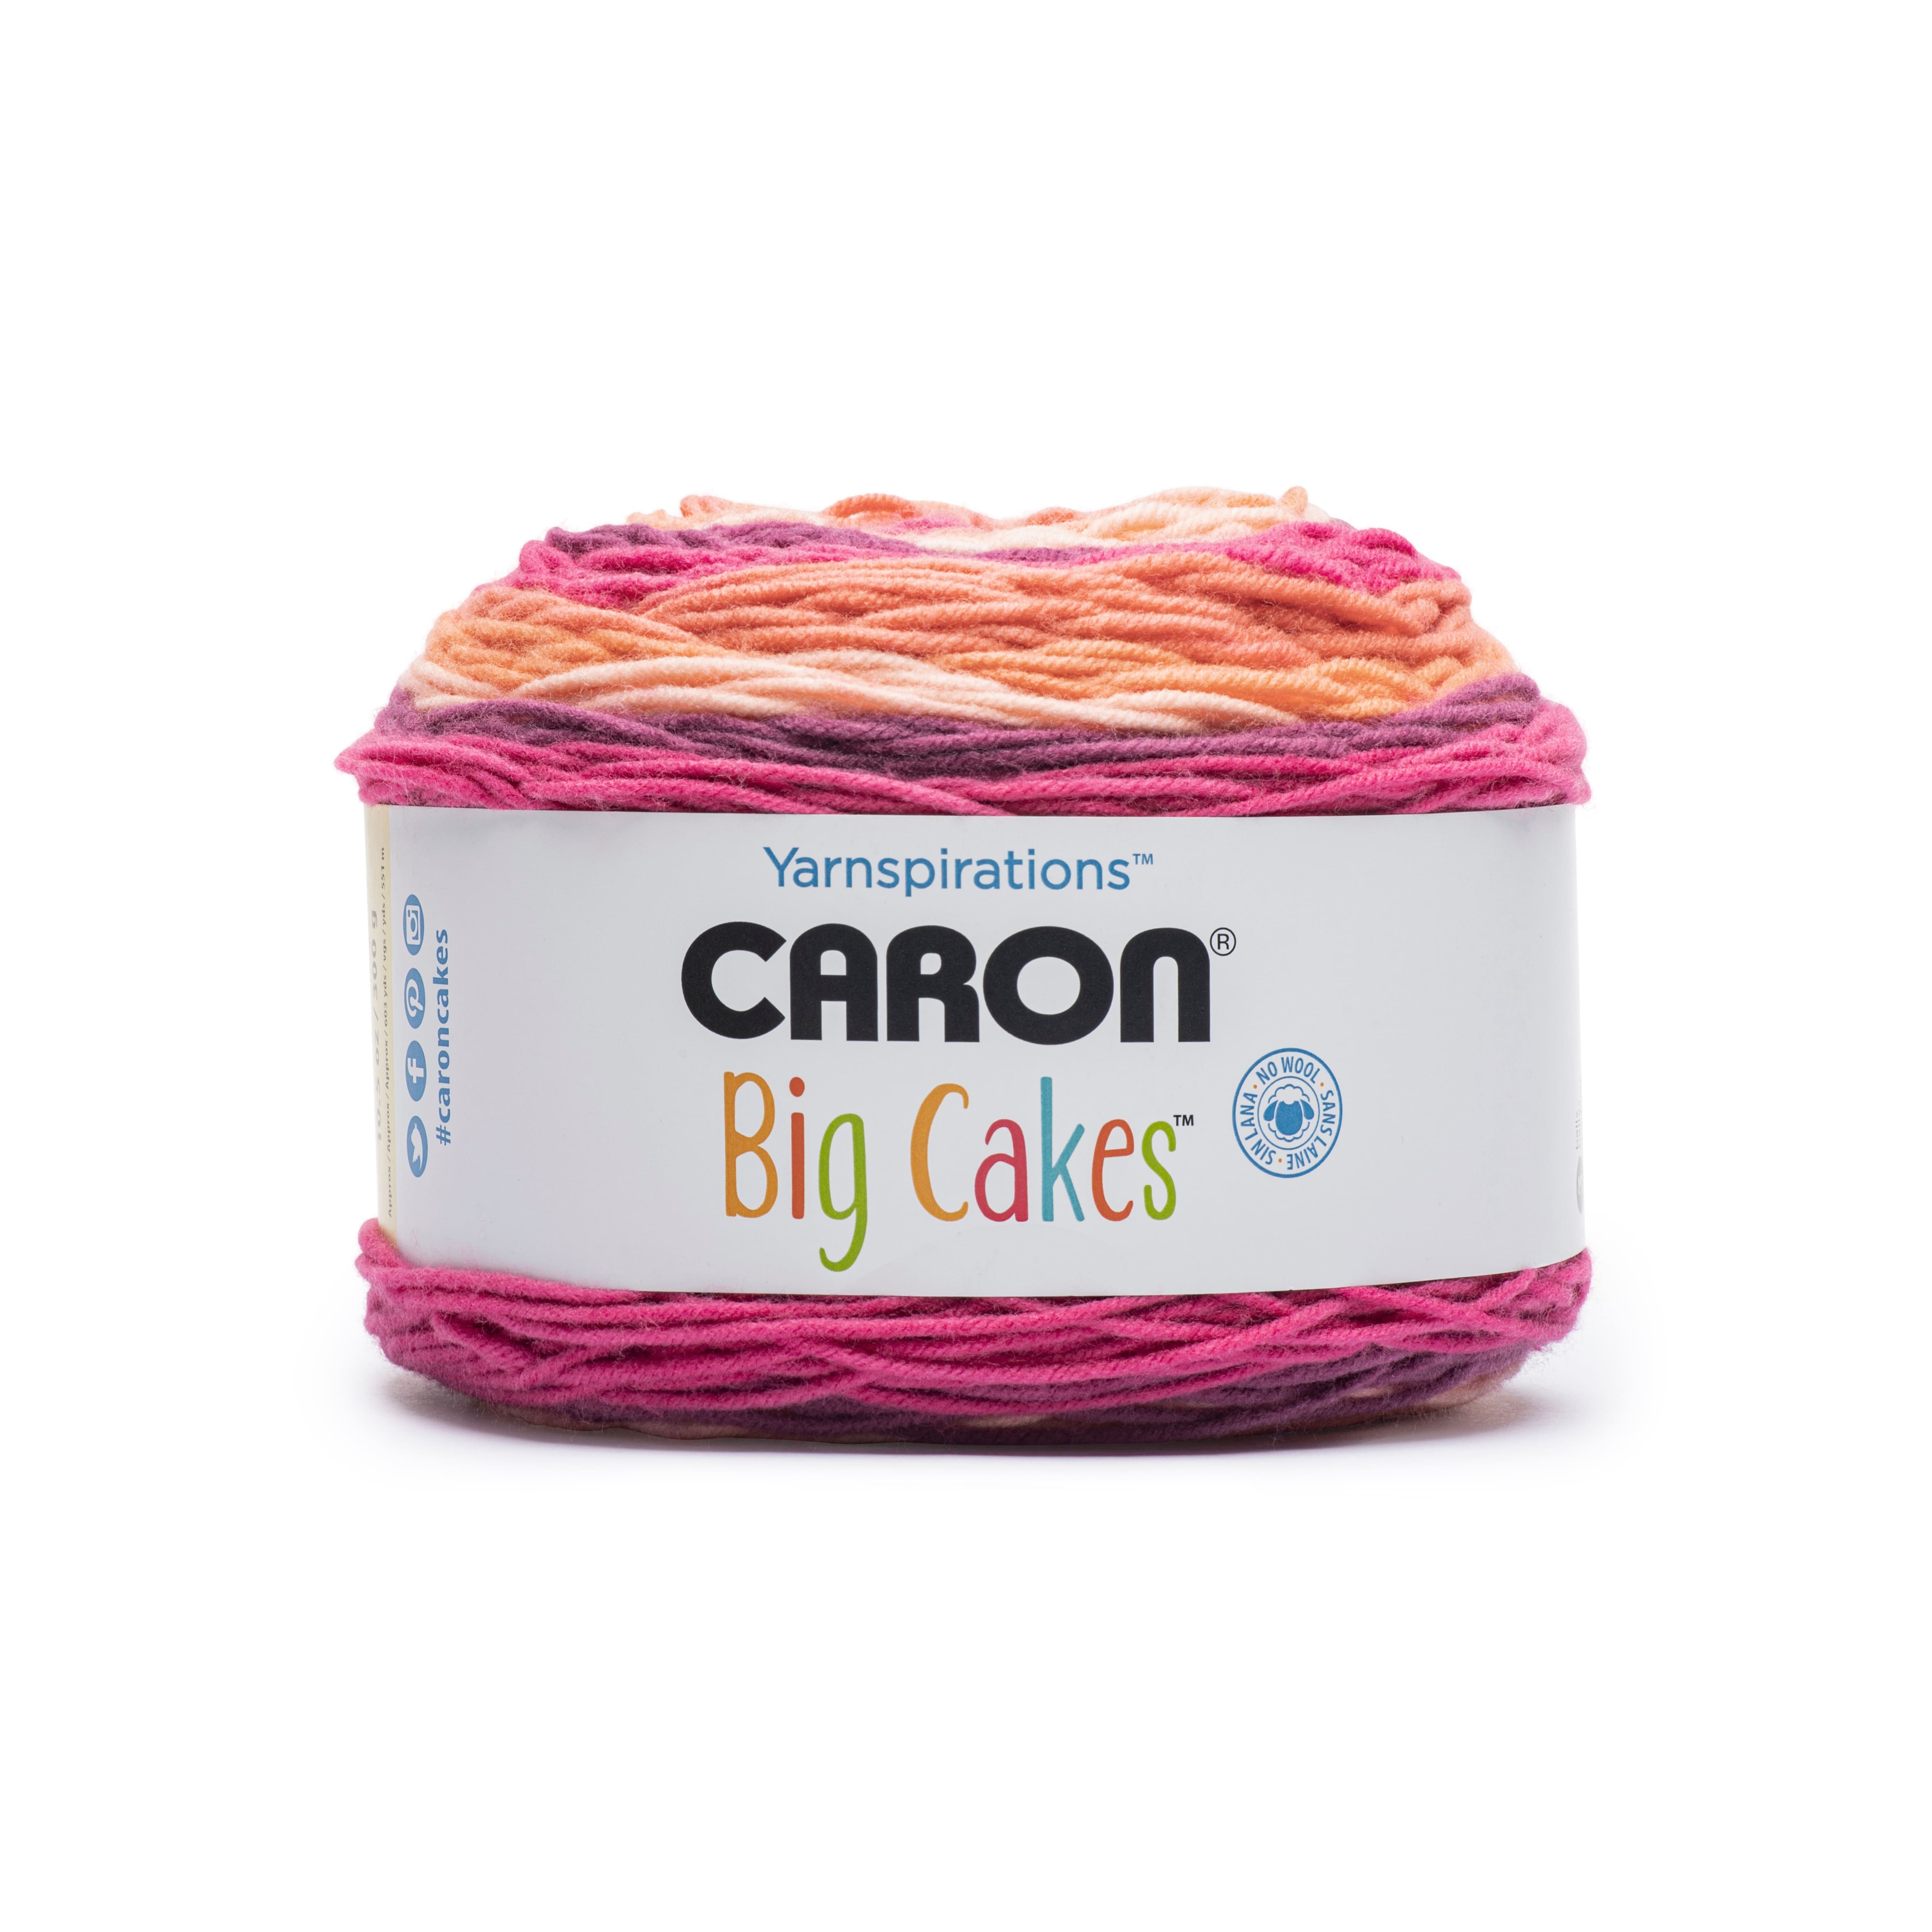 Caron Chunky Cakes Yarn, Yarnspirations